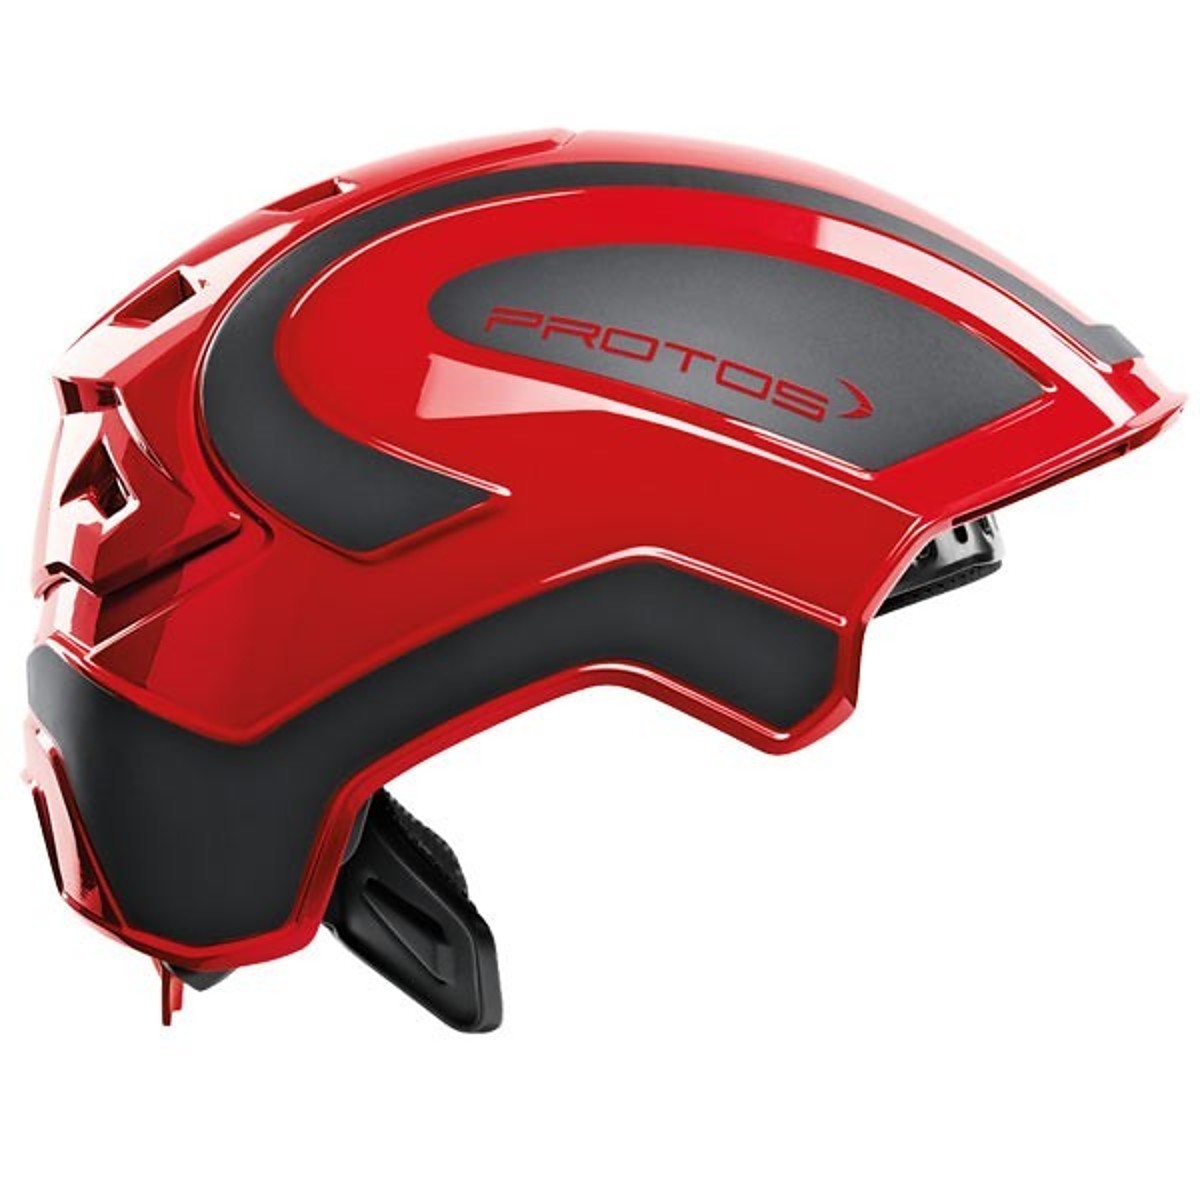 Protos Helm maximaler Schutz - 5